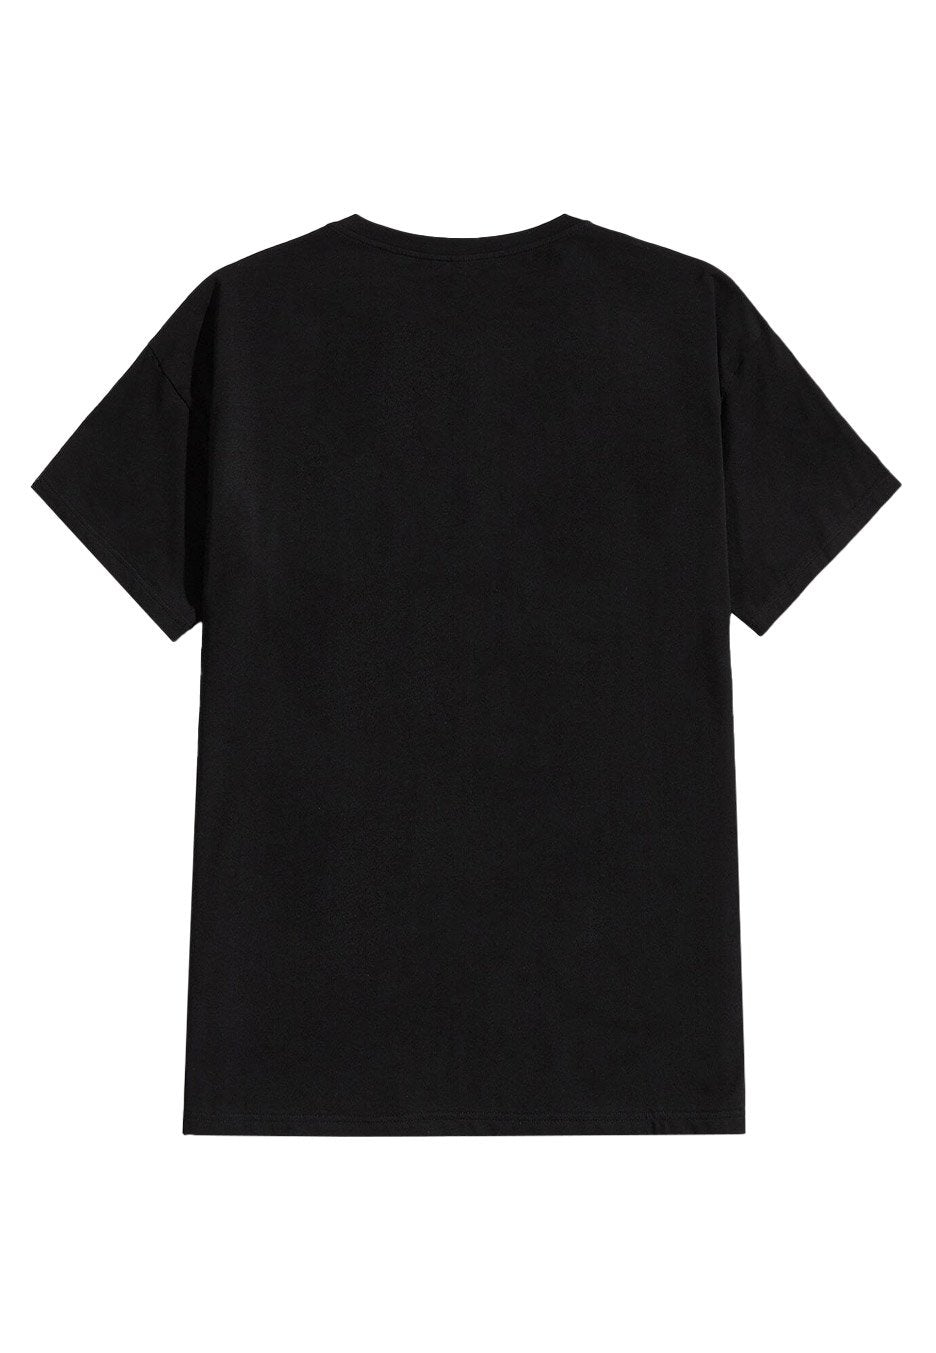 Evanescence - Classic Logo - T-Shirt